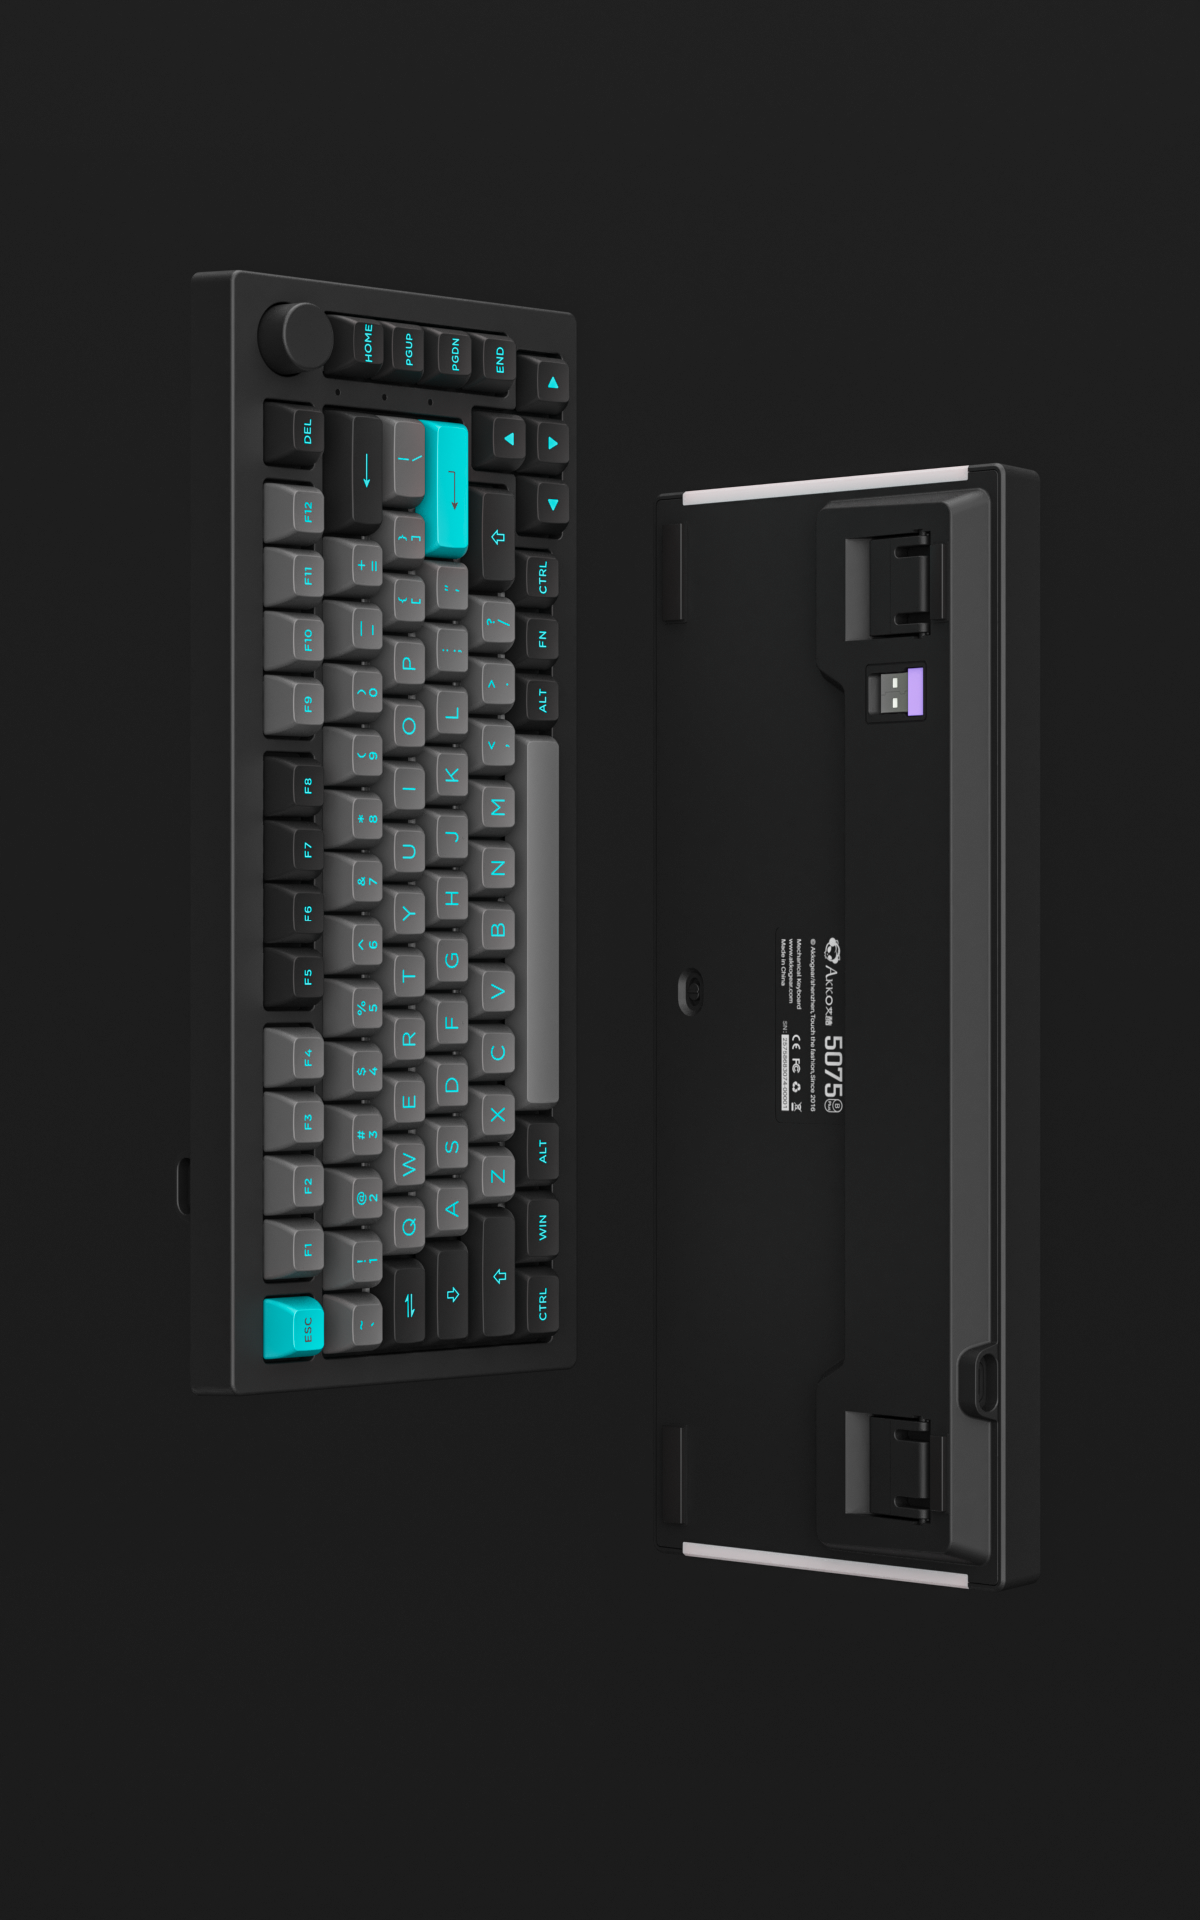 Akko 5075B Plus Black&Cyan 75% Hot Swappable Multi-Modes RGB Mechanical Gaming Keyboard 2.4GHz Wireless/USB Type-C/Bluetooth 5.0